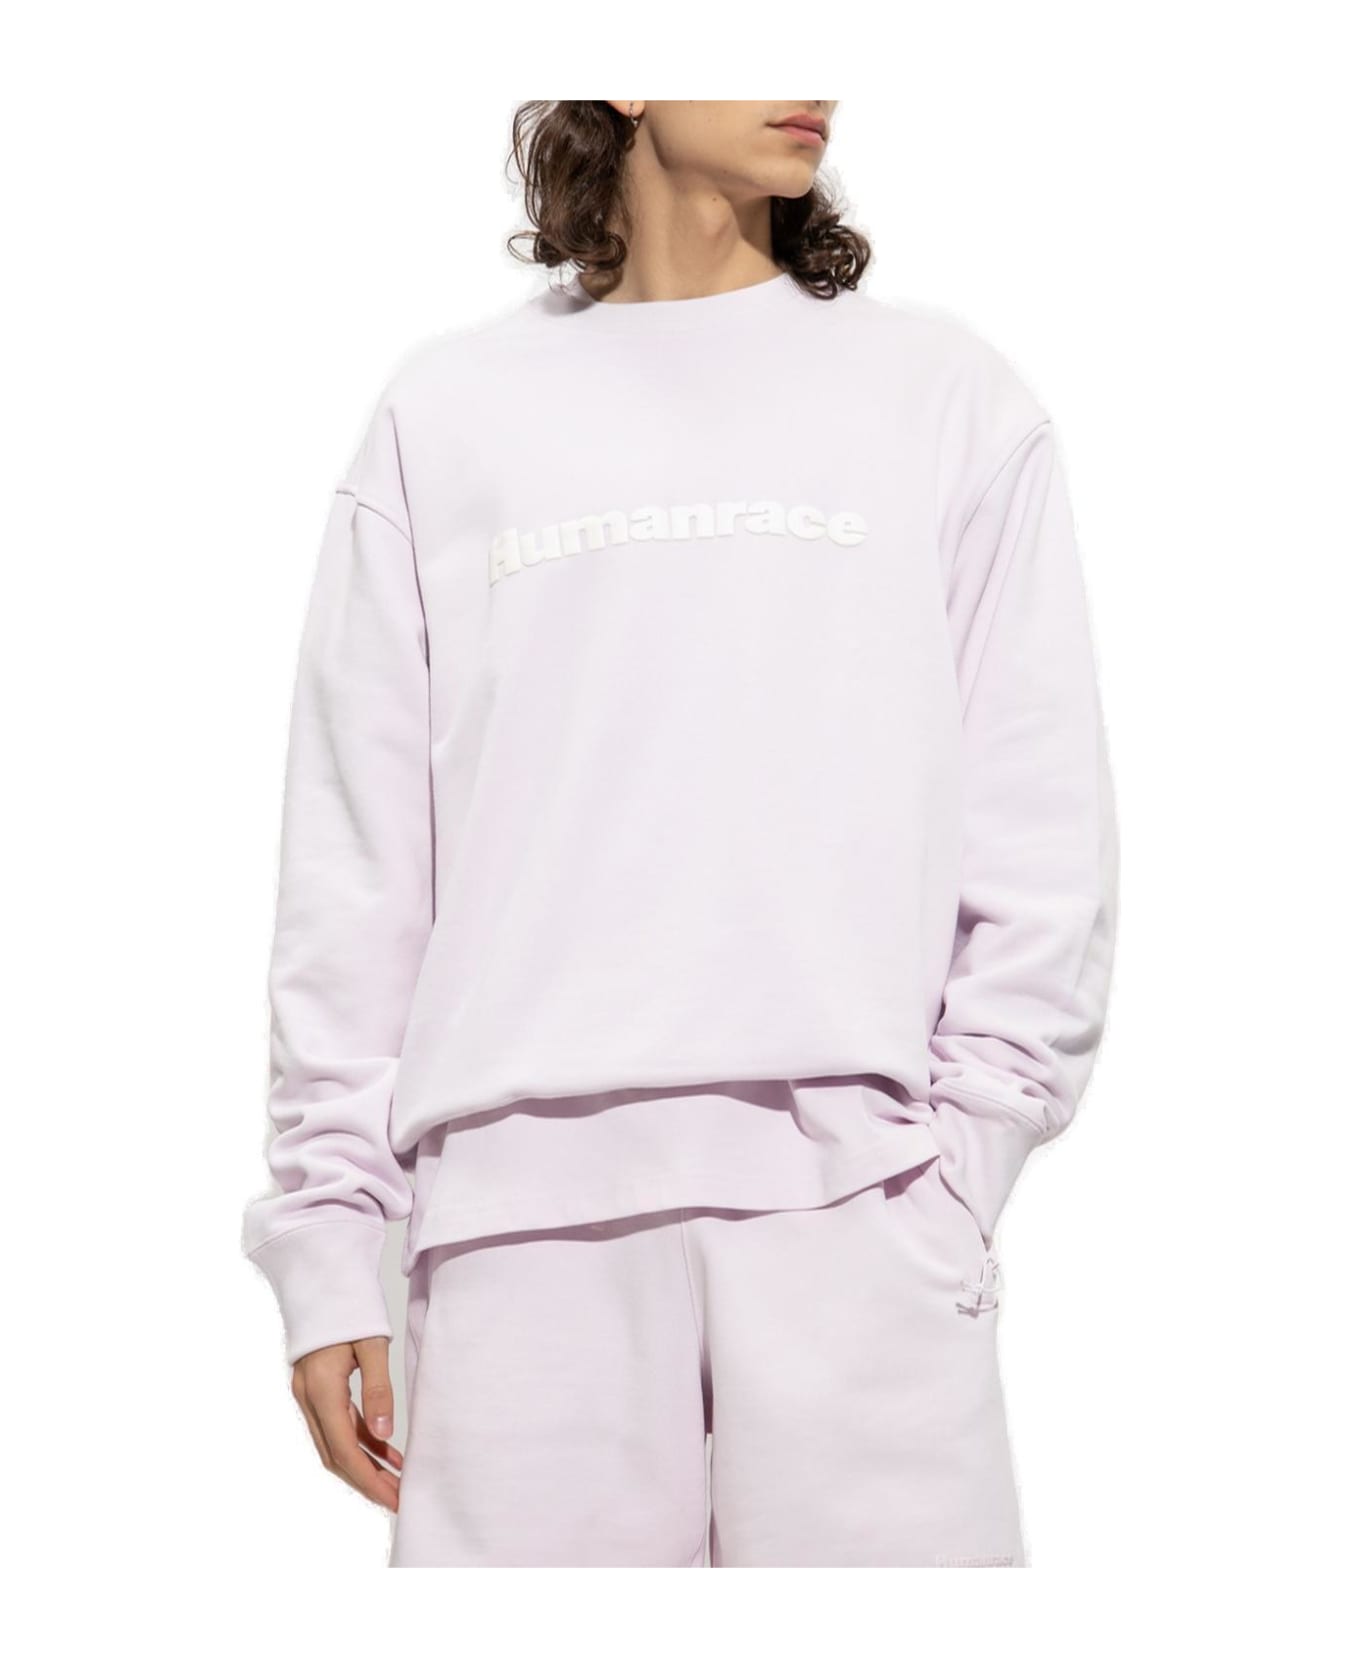 Adidas Pharrell Williams Basics Crewneck Sweatshirt - Almost Pink